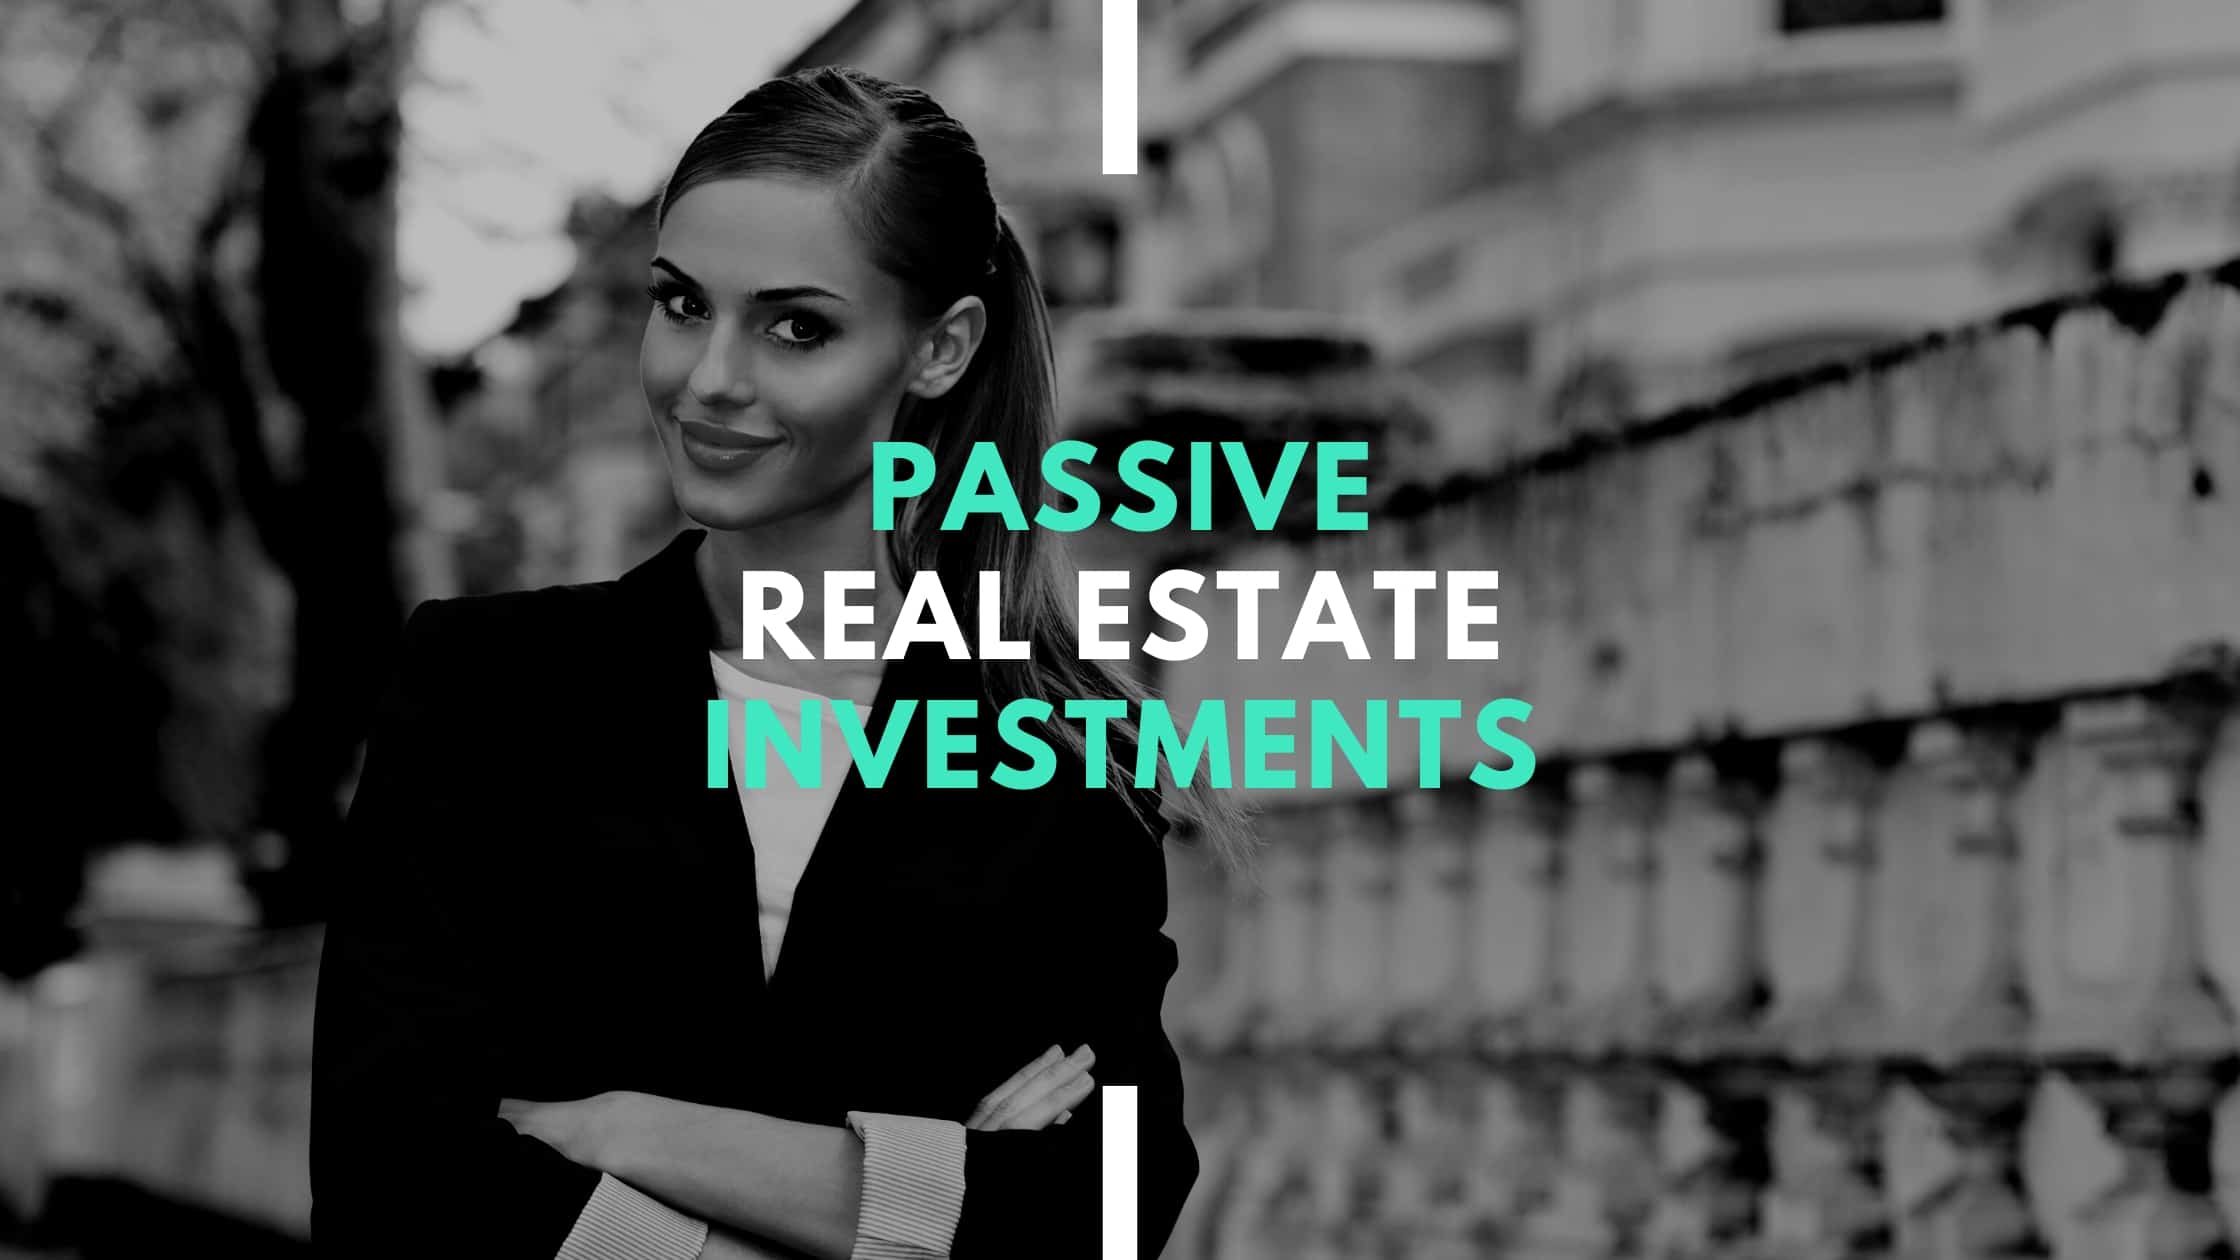 Passive real estate investing